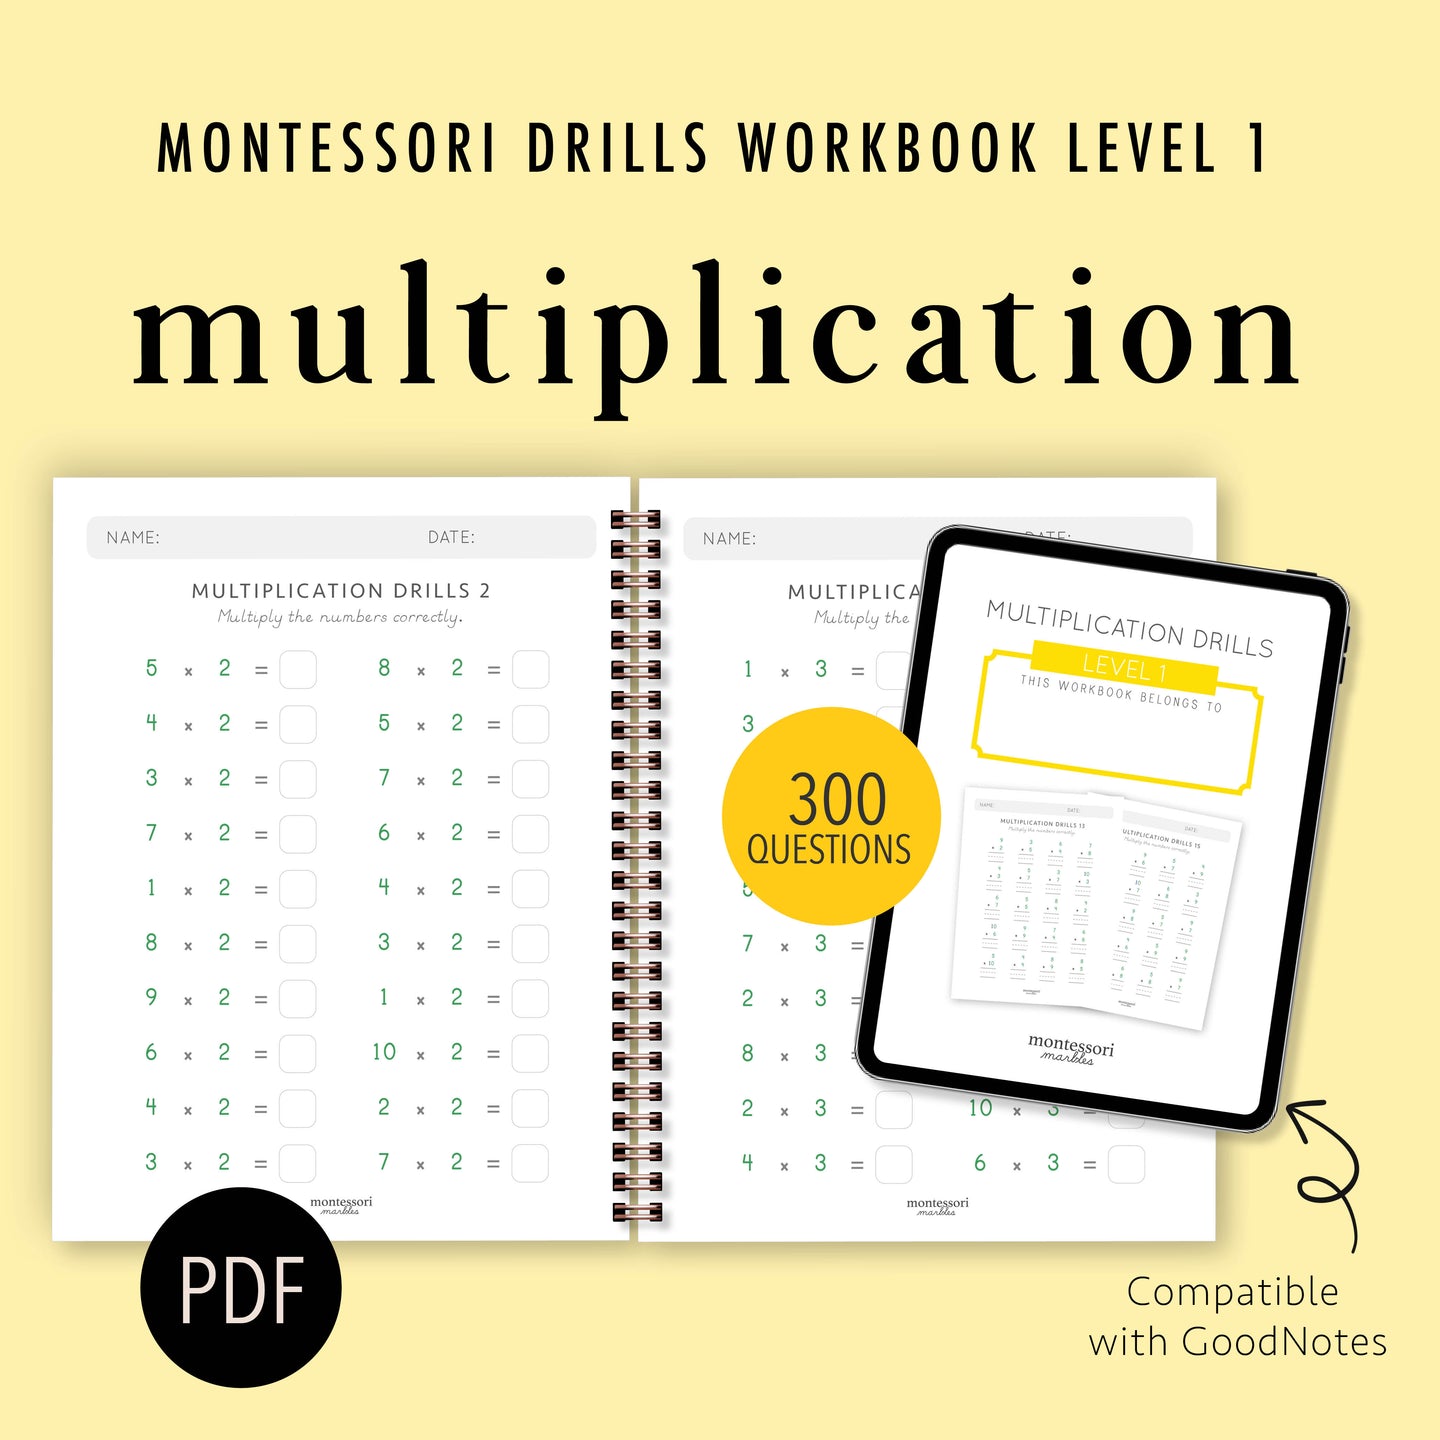 Multiplication Drills Workbook Level 1